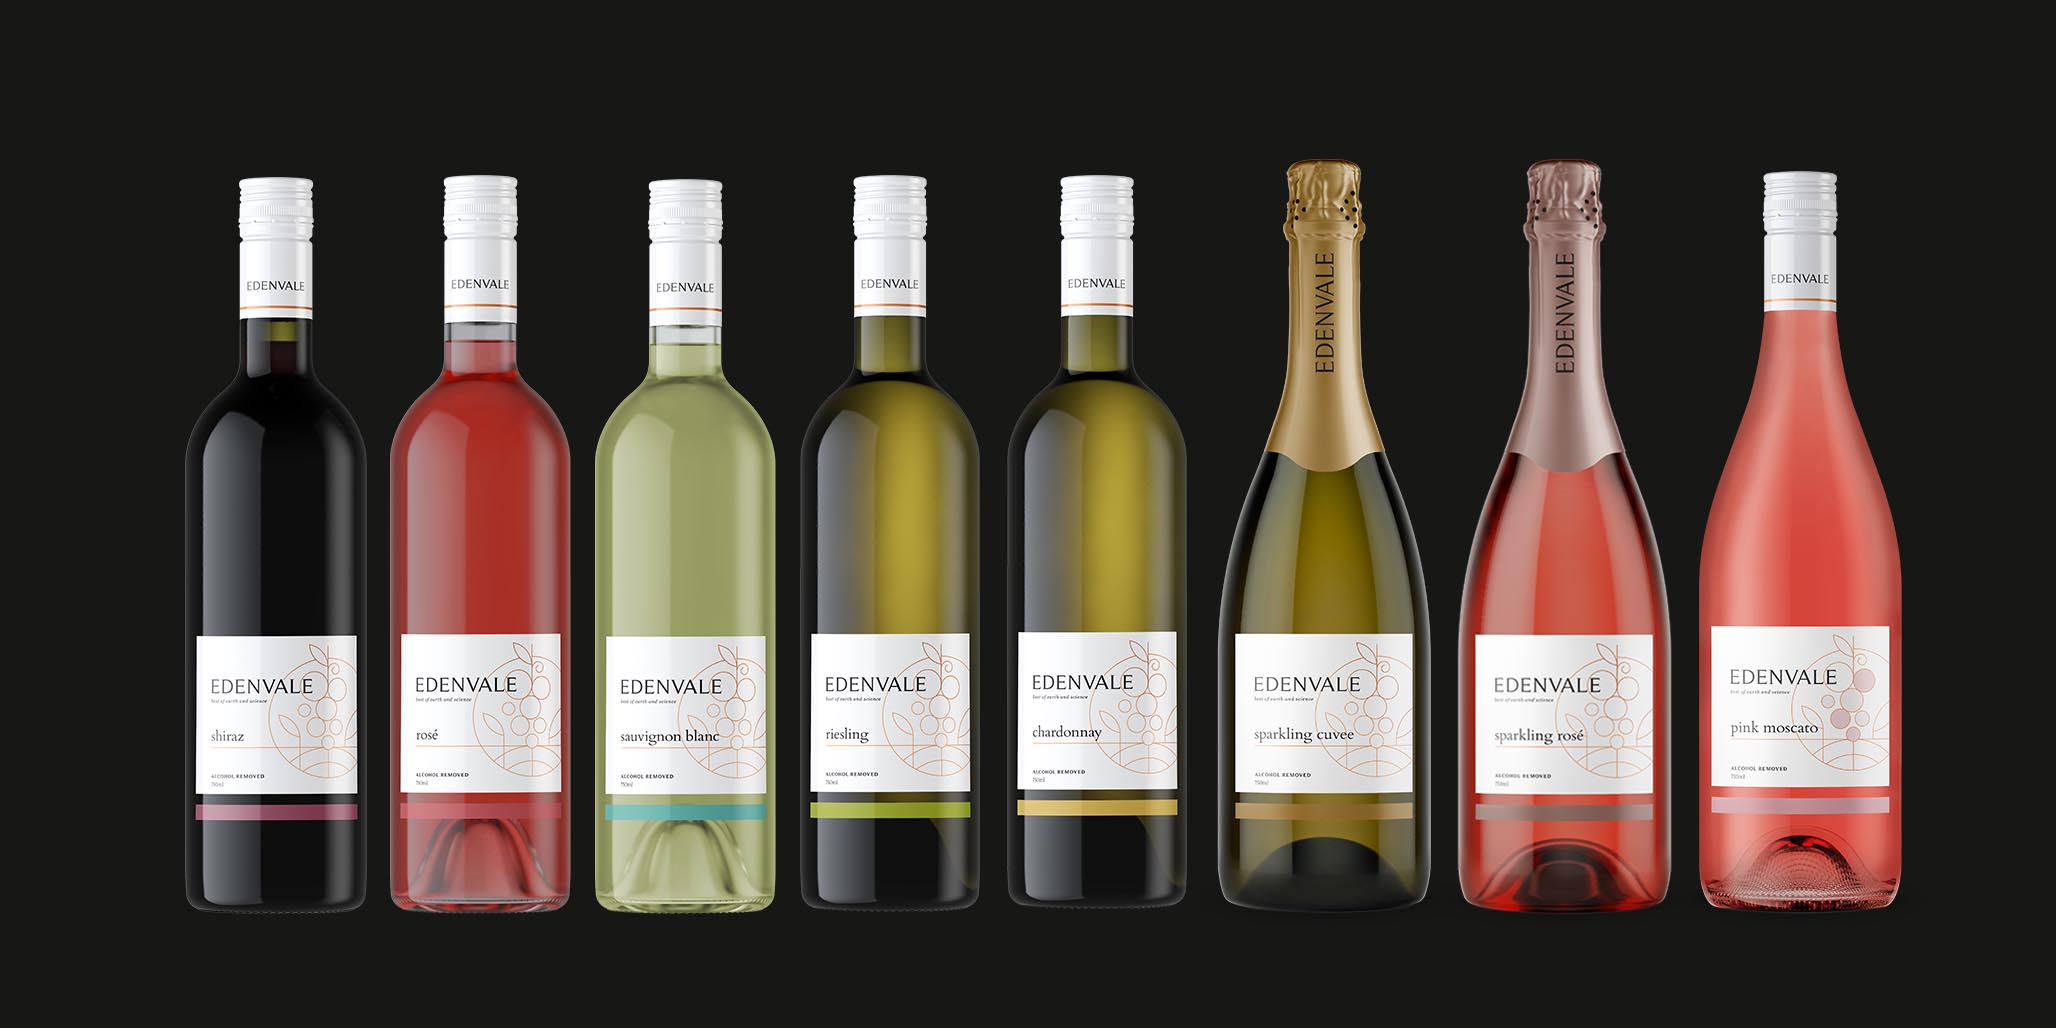 Australian wine label designers, Percept, create branding and packaging design for Edenvale, project image L